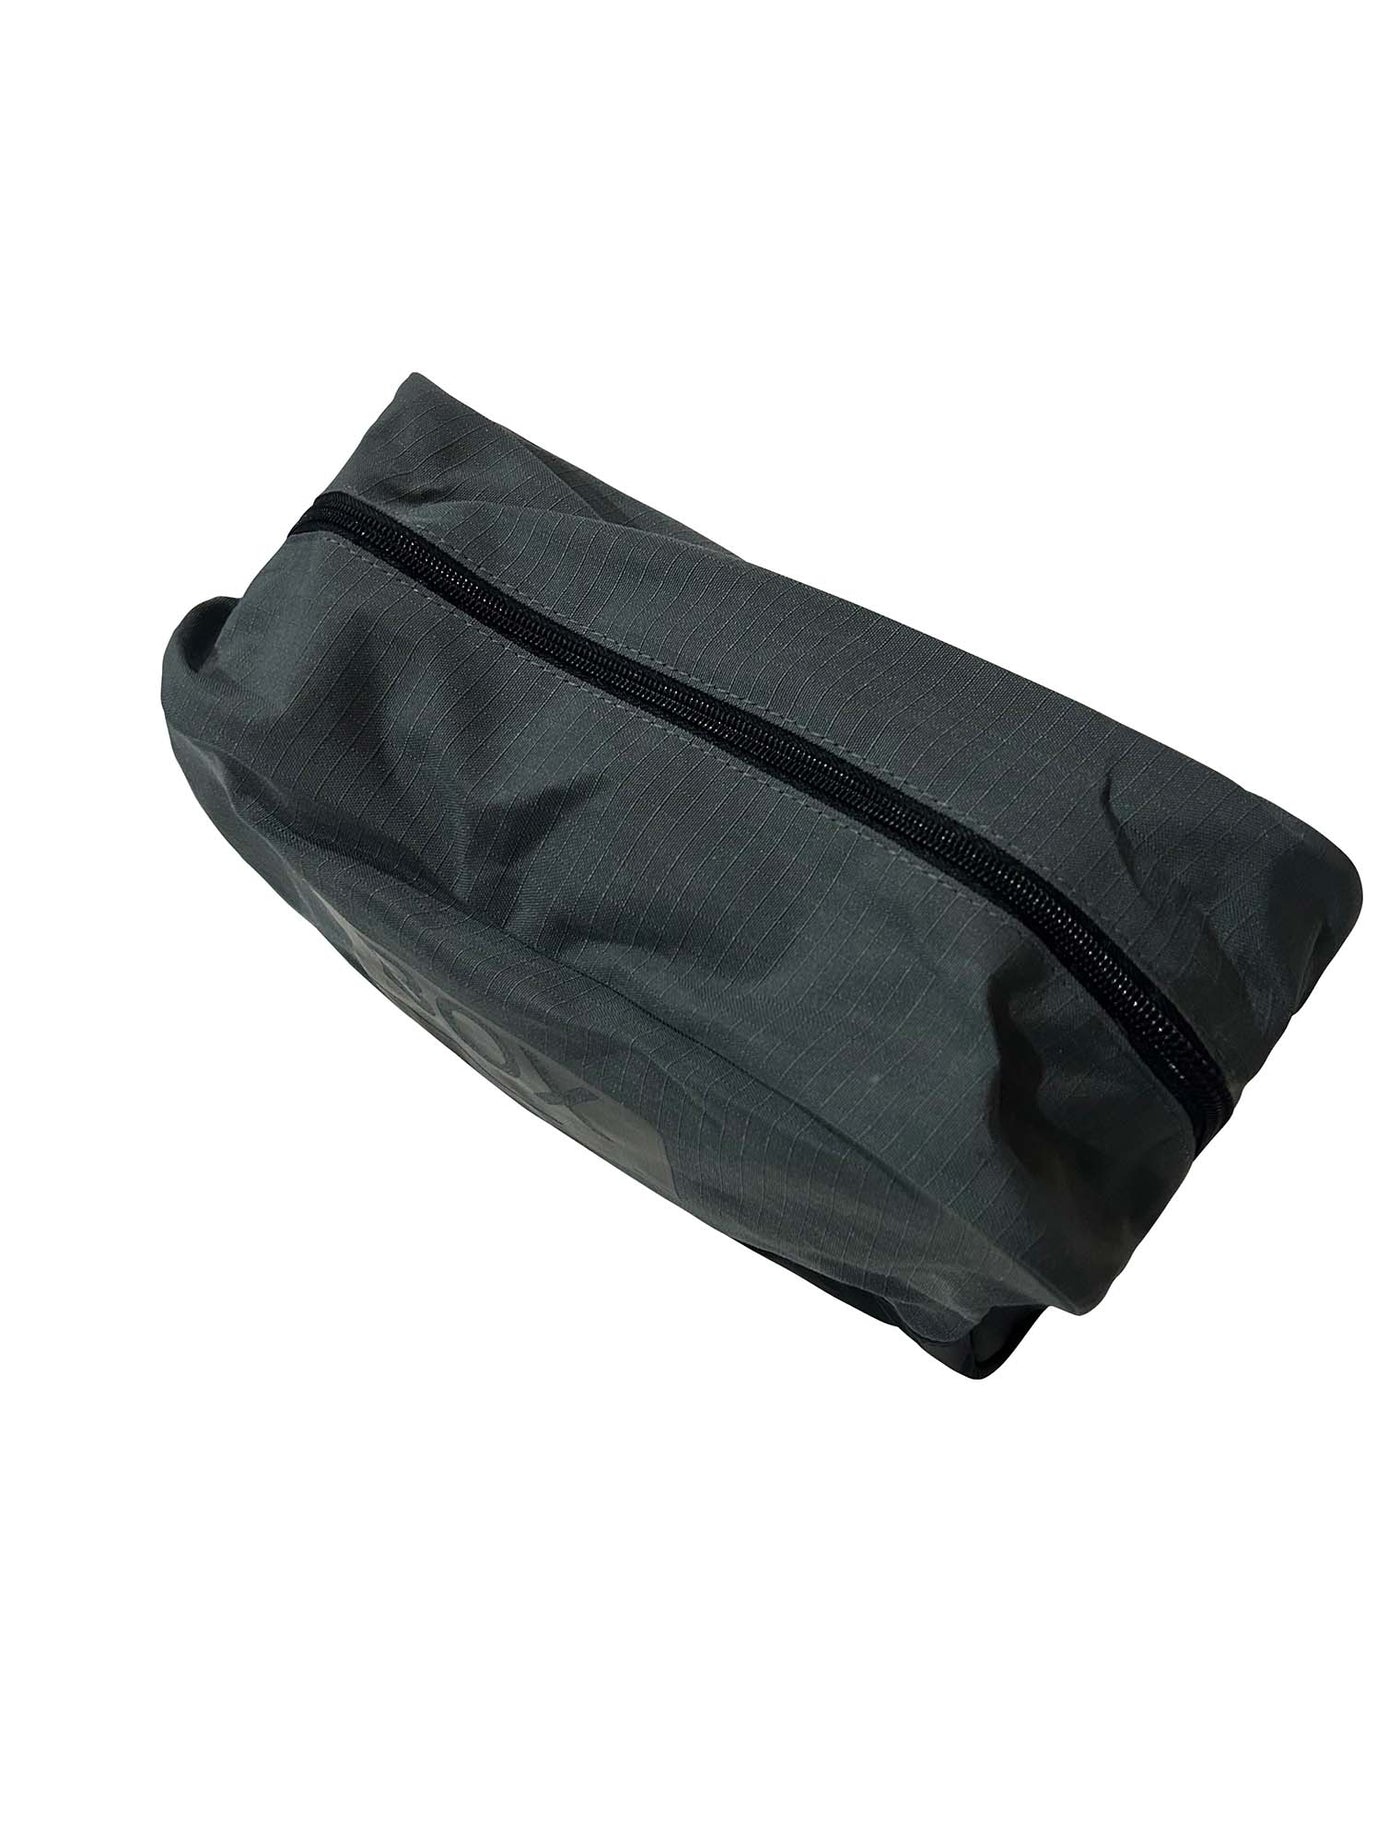 Toiletry Bag - Grey - boxmenswear - {{variant_title}}